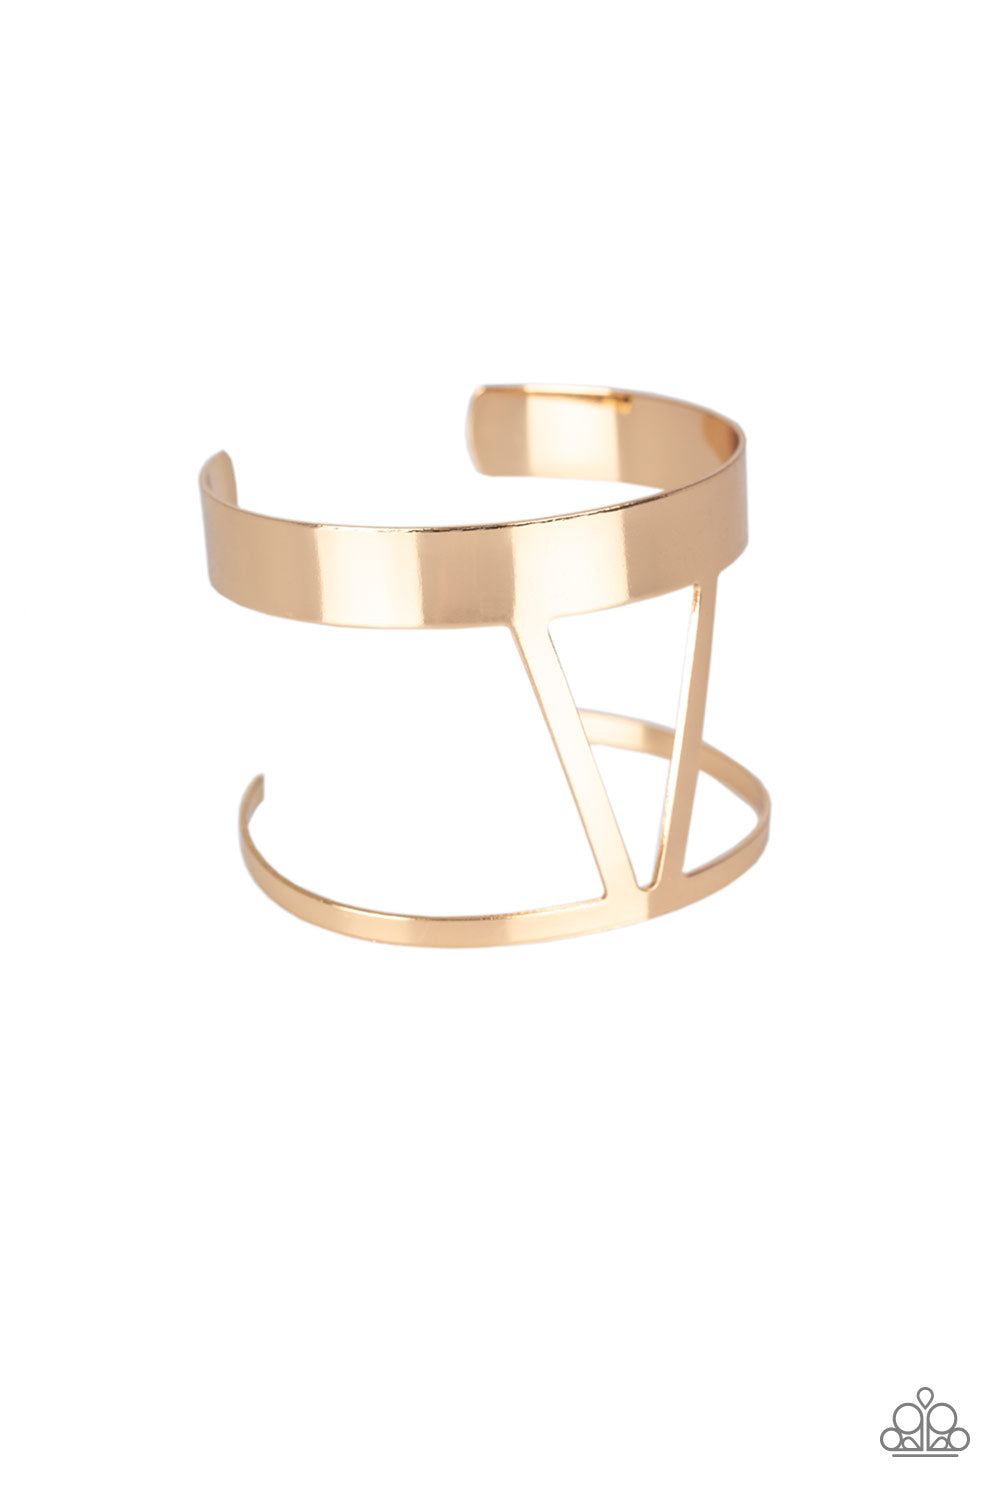 Ruler Ruler - Gold Bracelet - Paparazzi Accessories